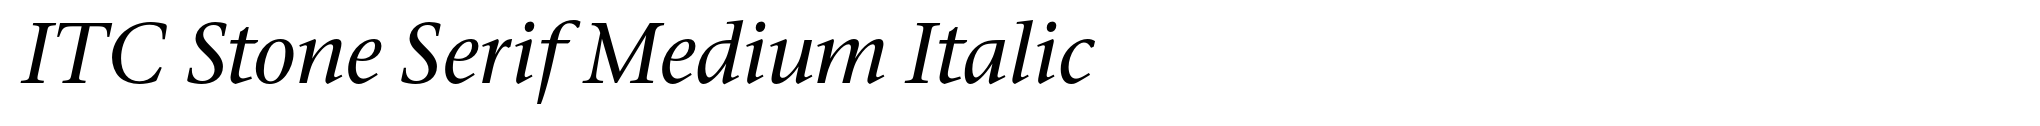 ITC Stone Serif Medium Italic image